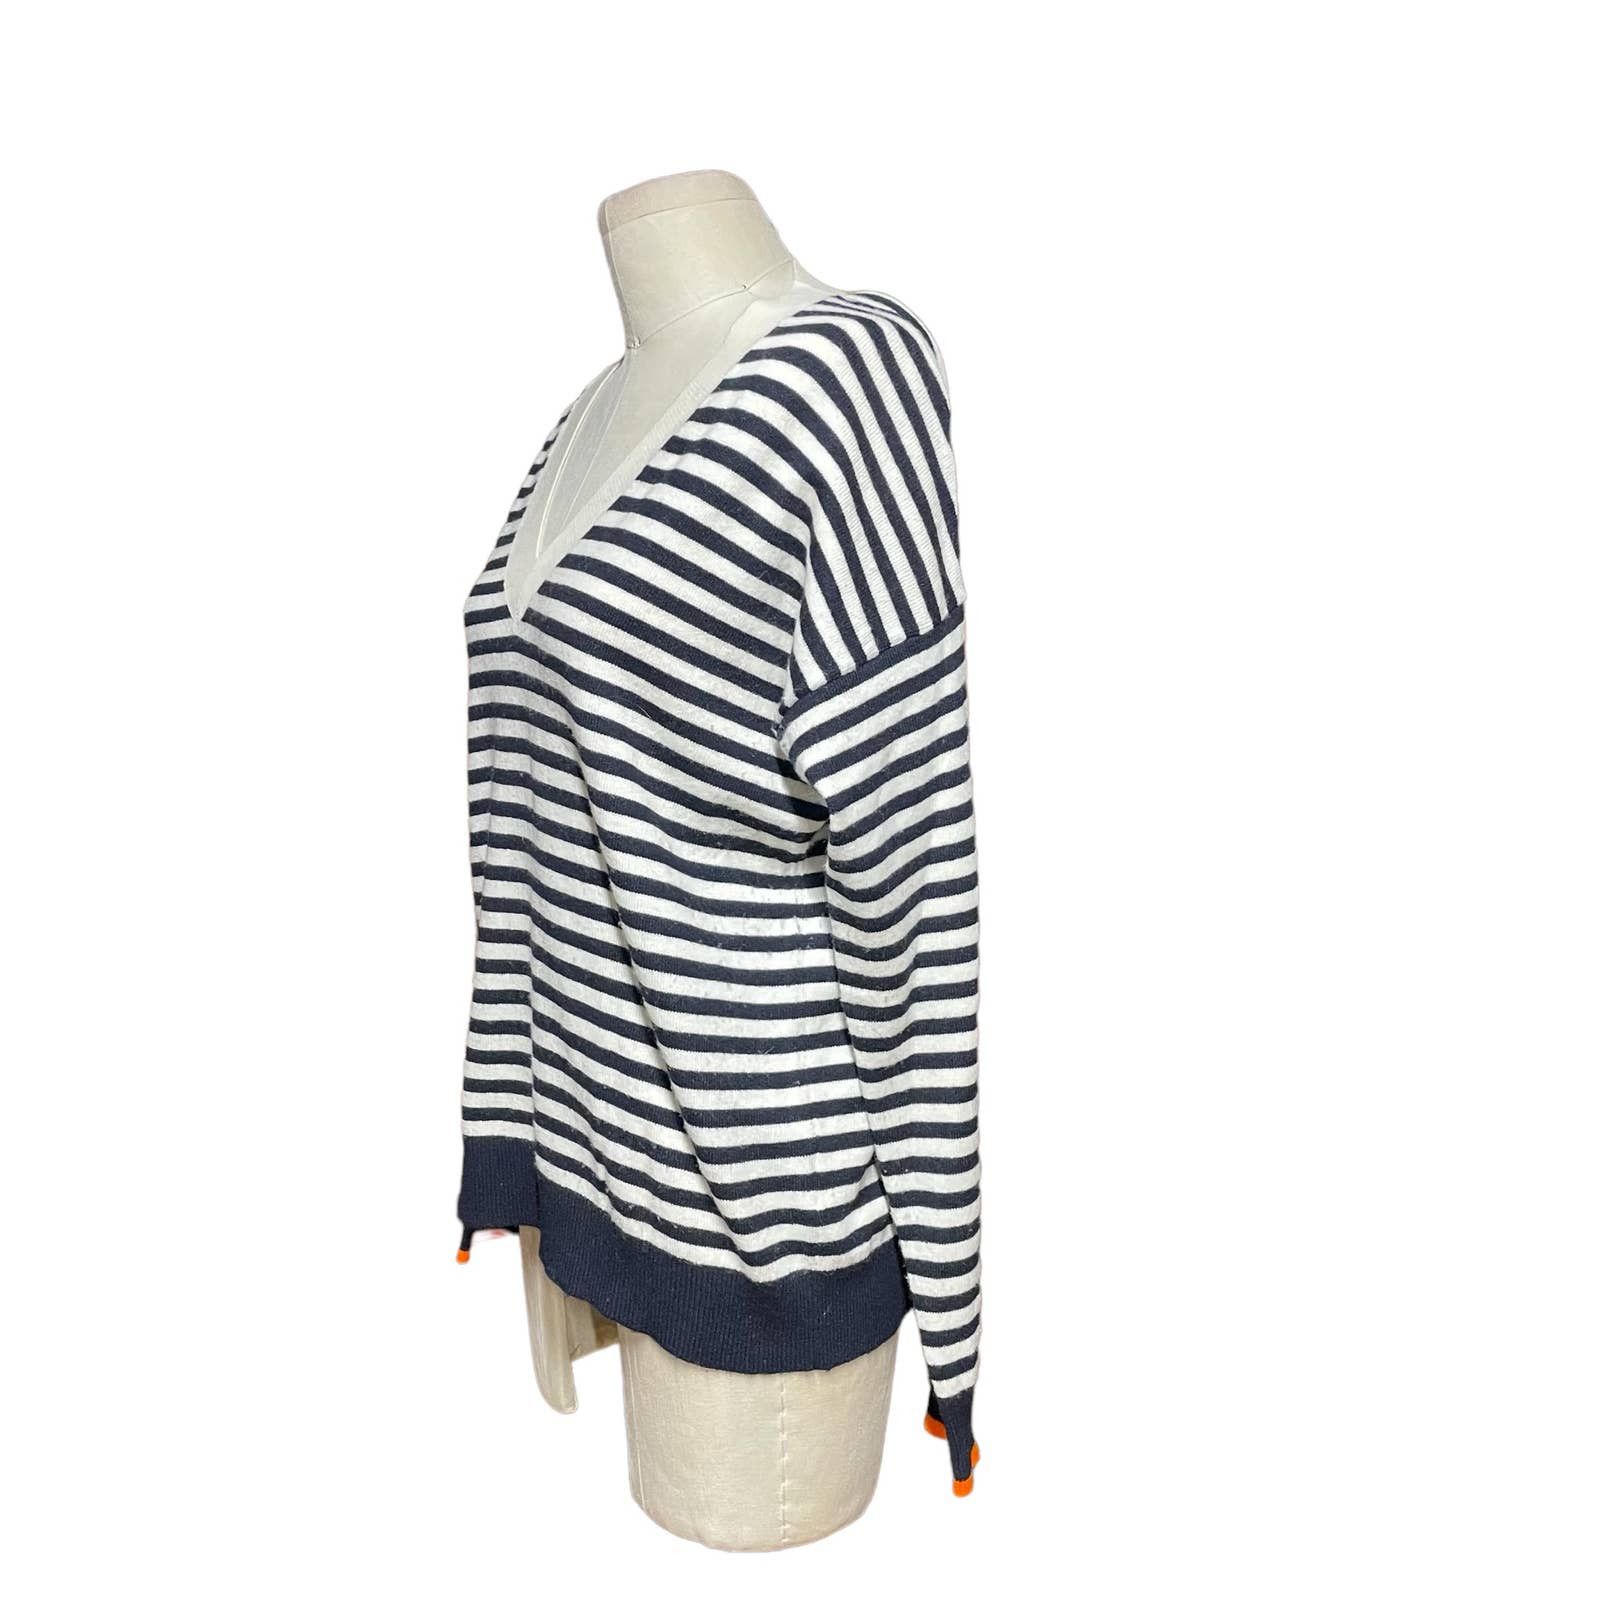 Chinti and Parker Chinti & Parker Navy Blue Cream Stripe Wool Cashmere Sweater Size M / US 6-8 / IT 42-44 - 4 Thumbnail